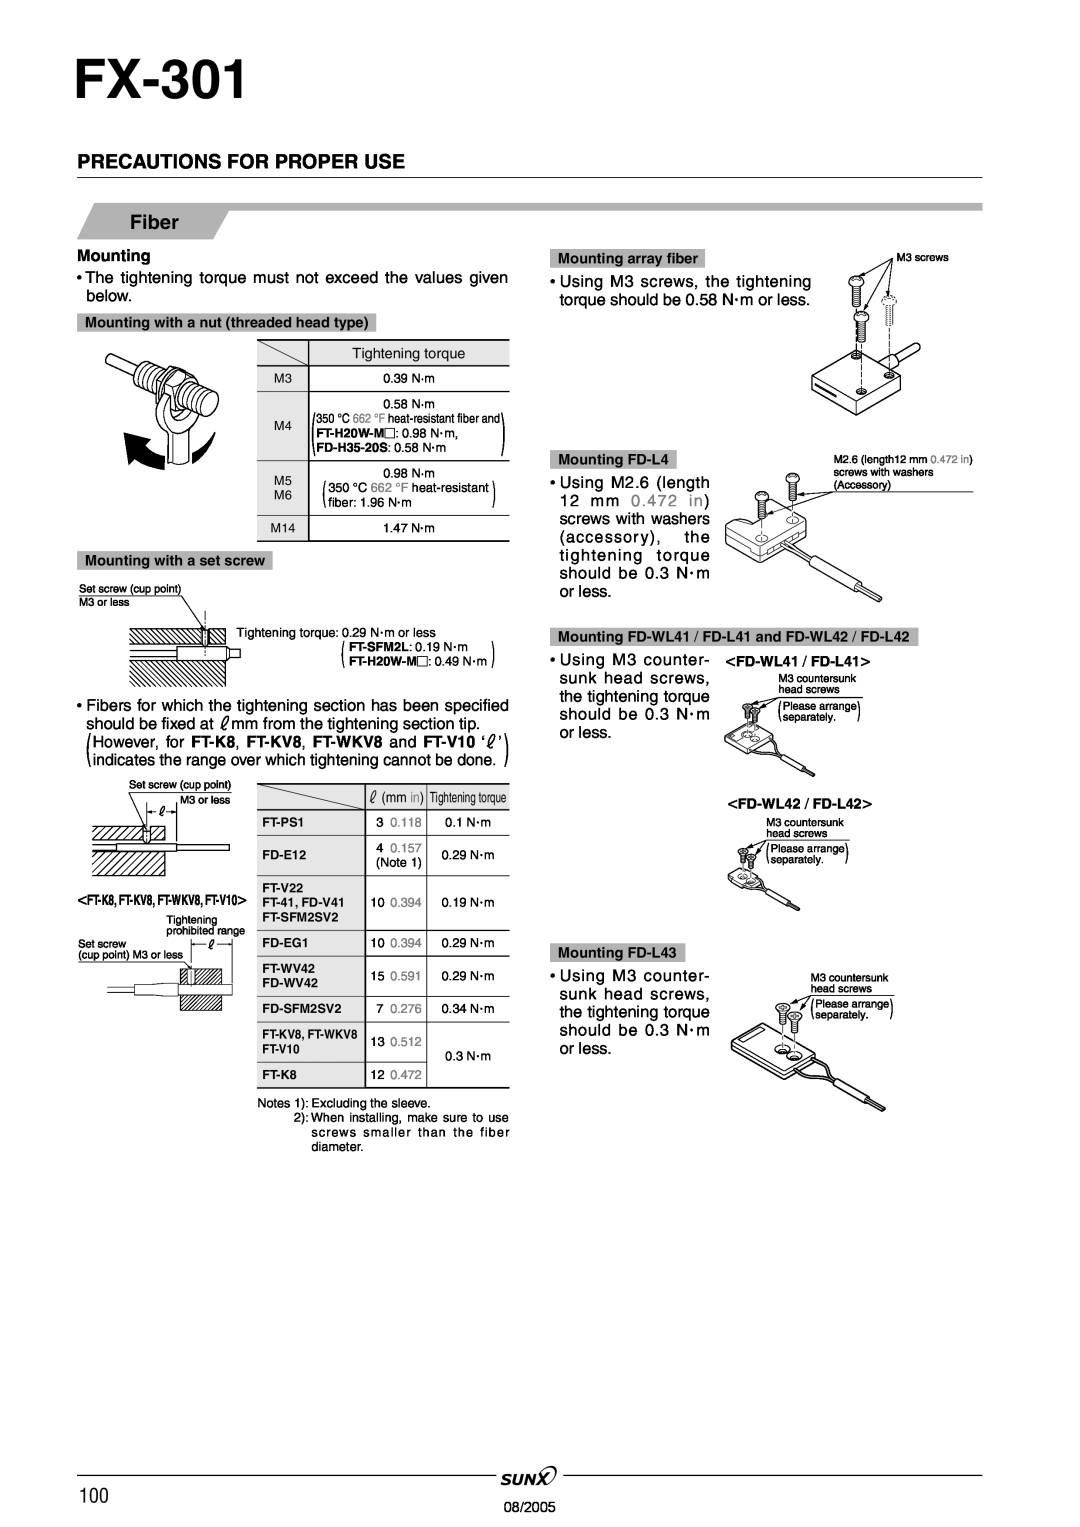 Panasonic FX-301 manual Fiber, Precautions For Proper Use, Mounting 